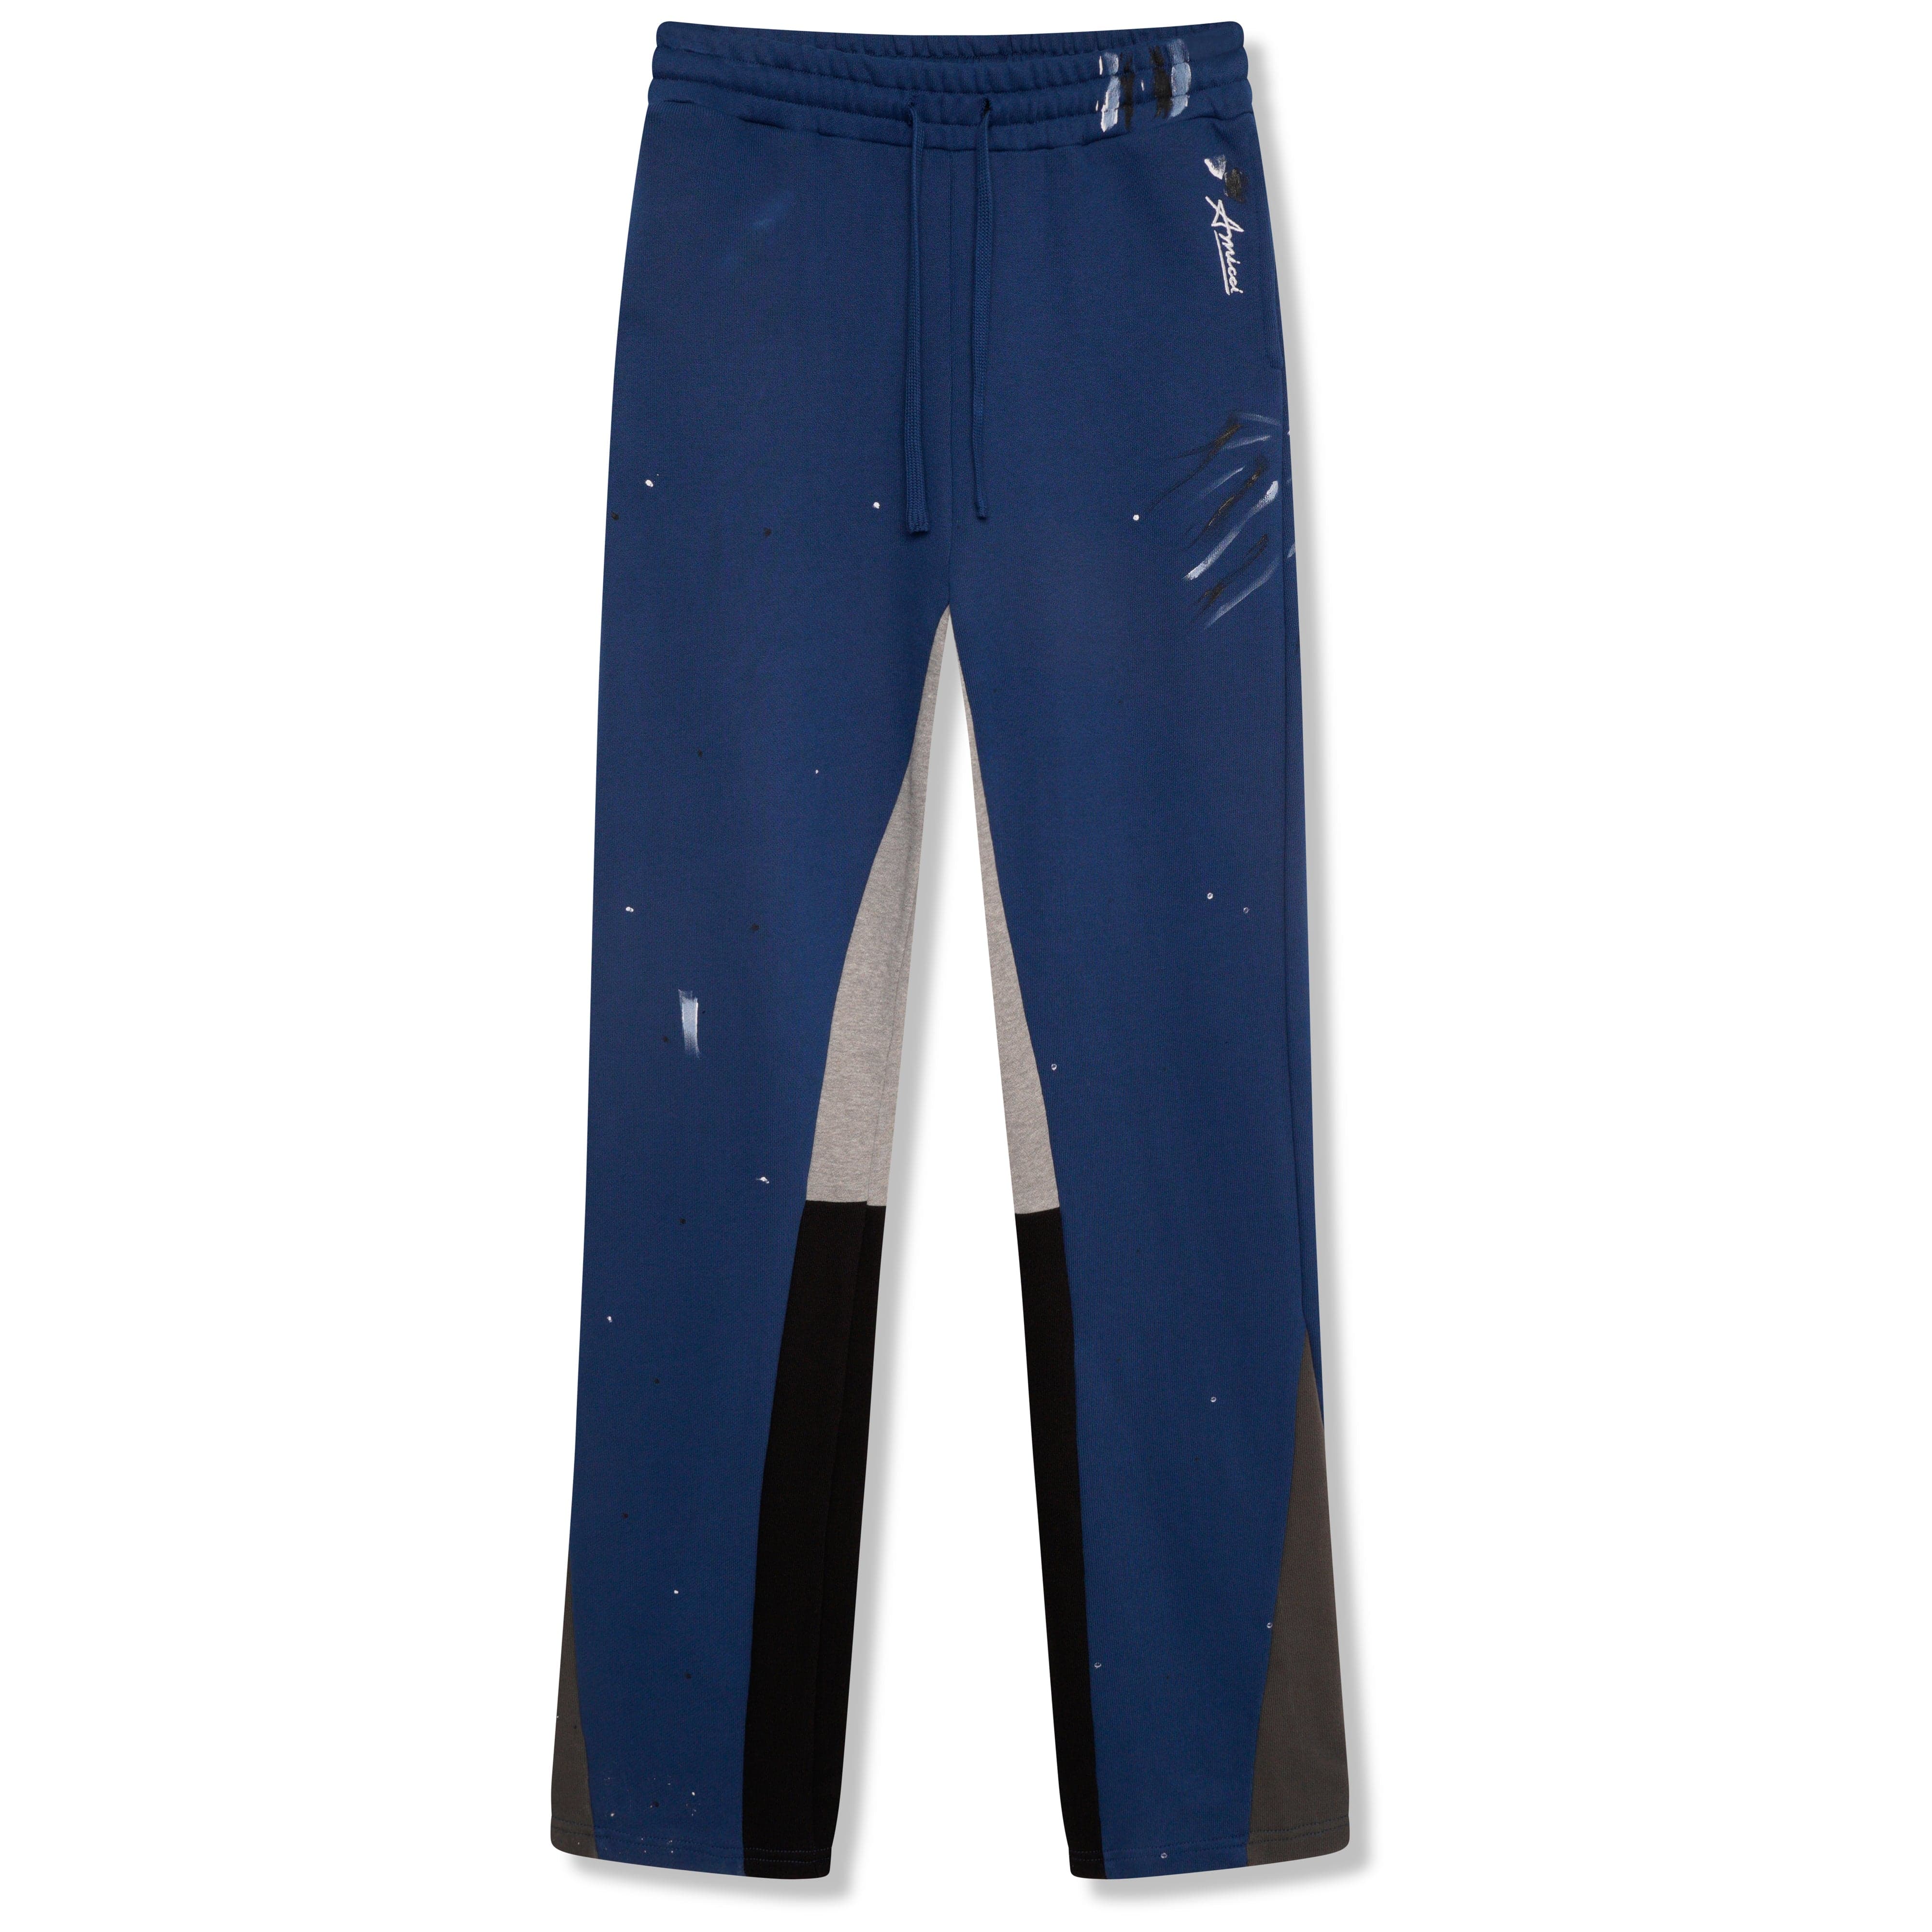 Amicci Melfi Flare Jogger Pants Blue - Premium Flare Joggers